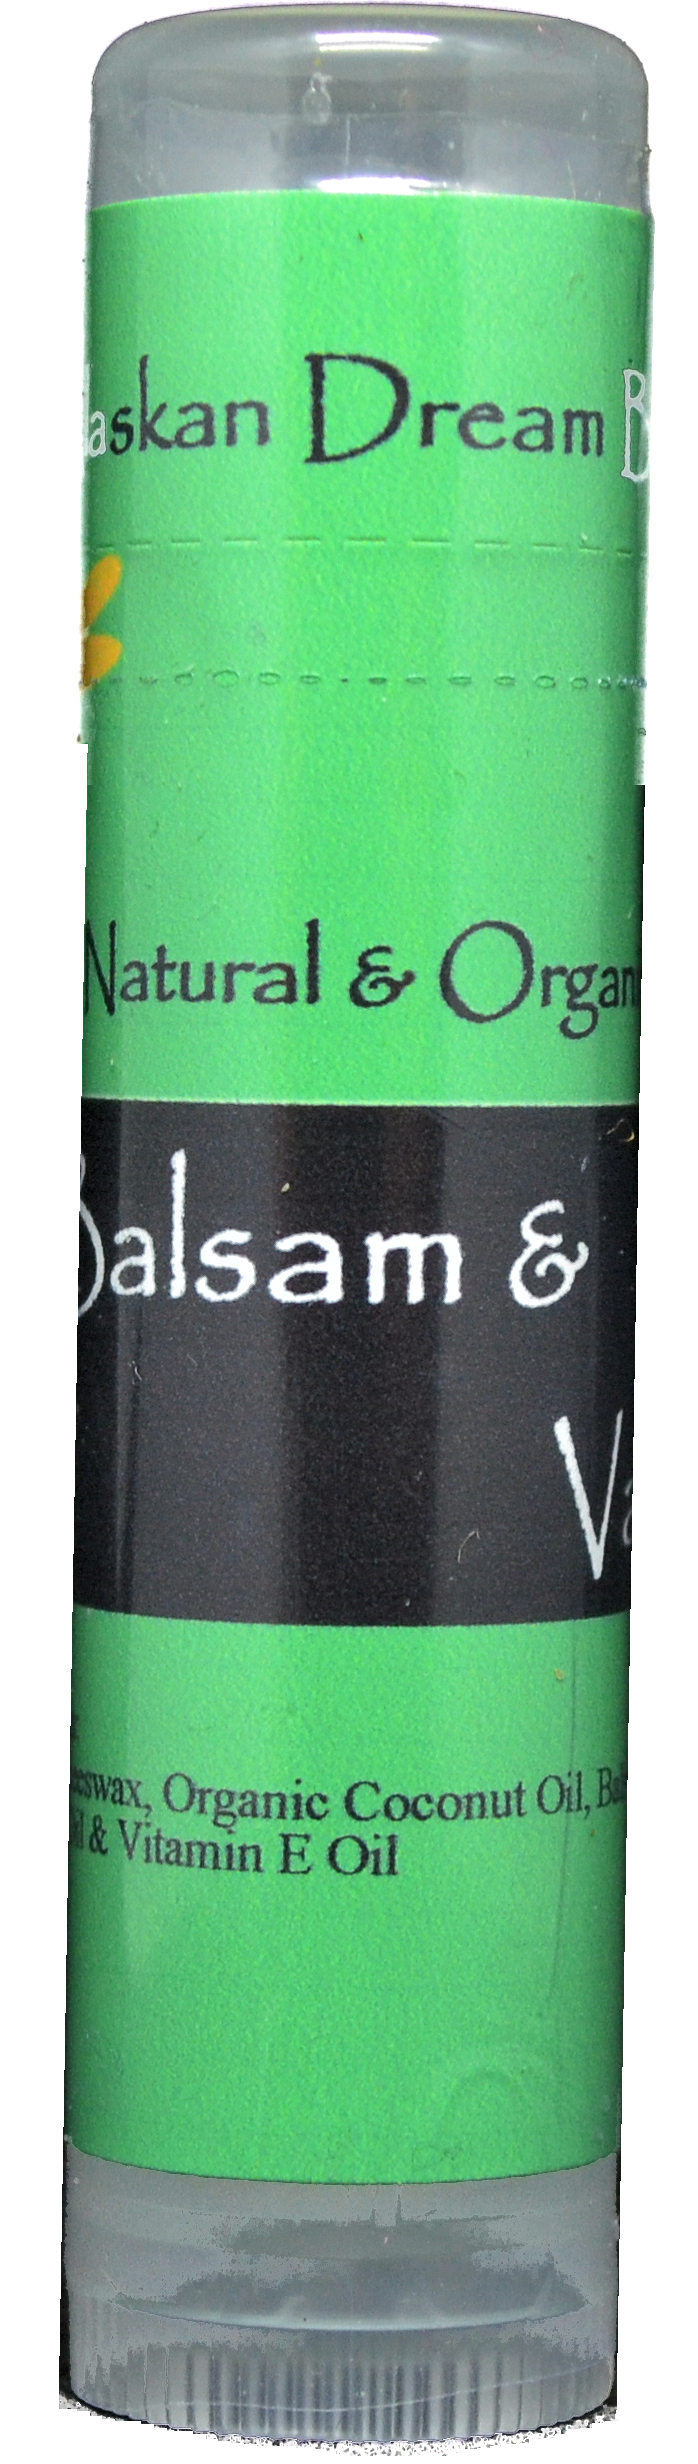 Balsam & Vanilla Lip Balm - Alaskan Dream Botanicals